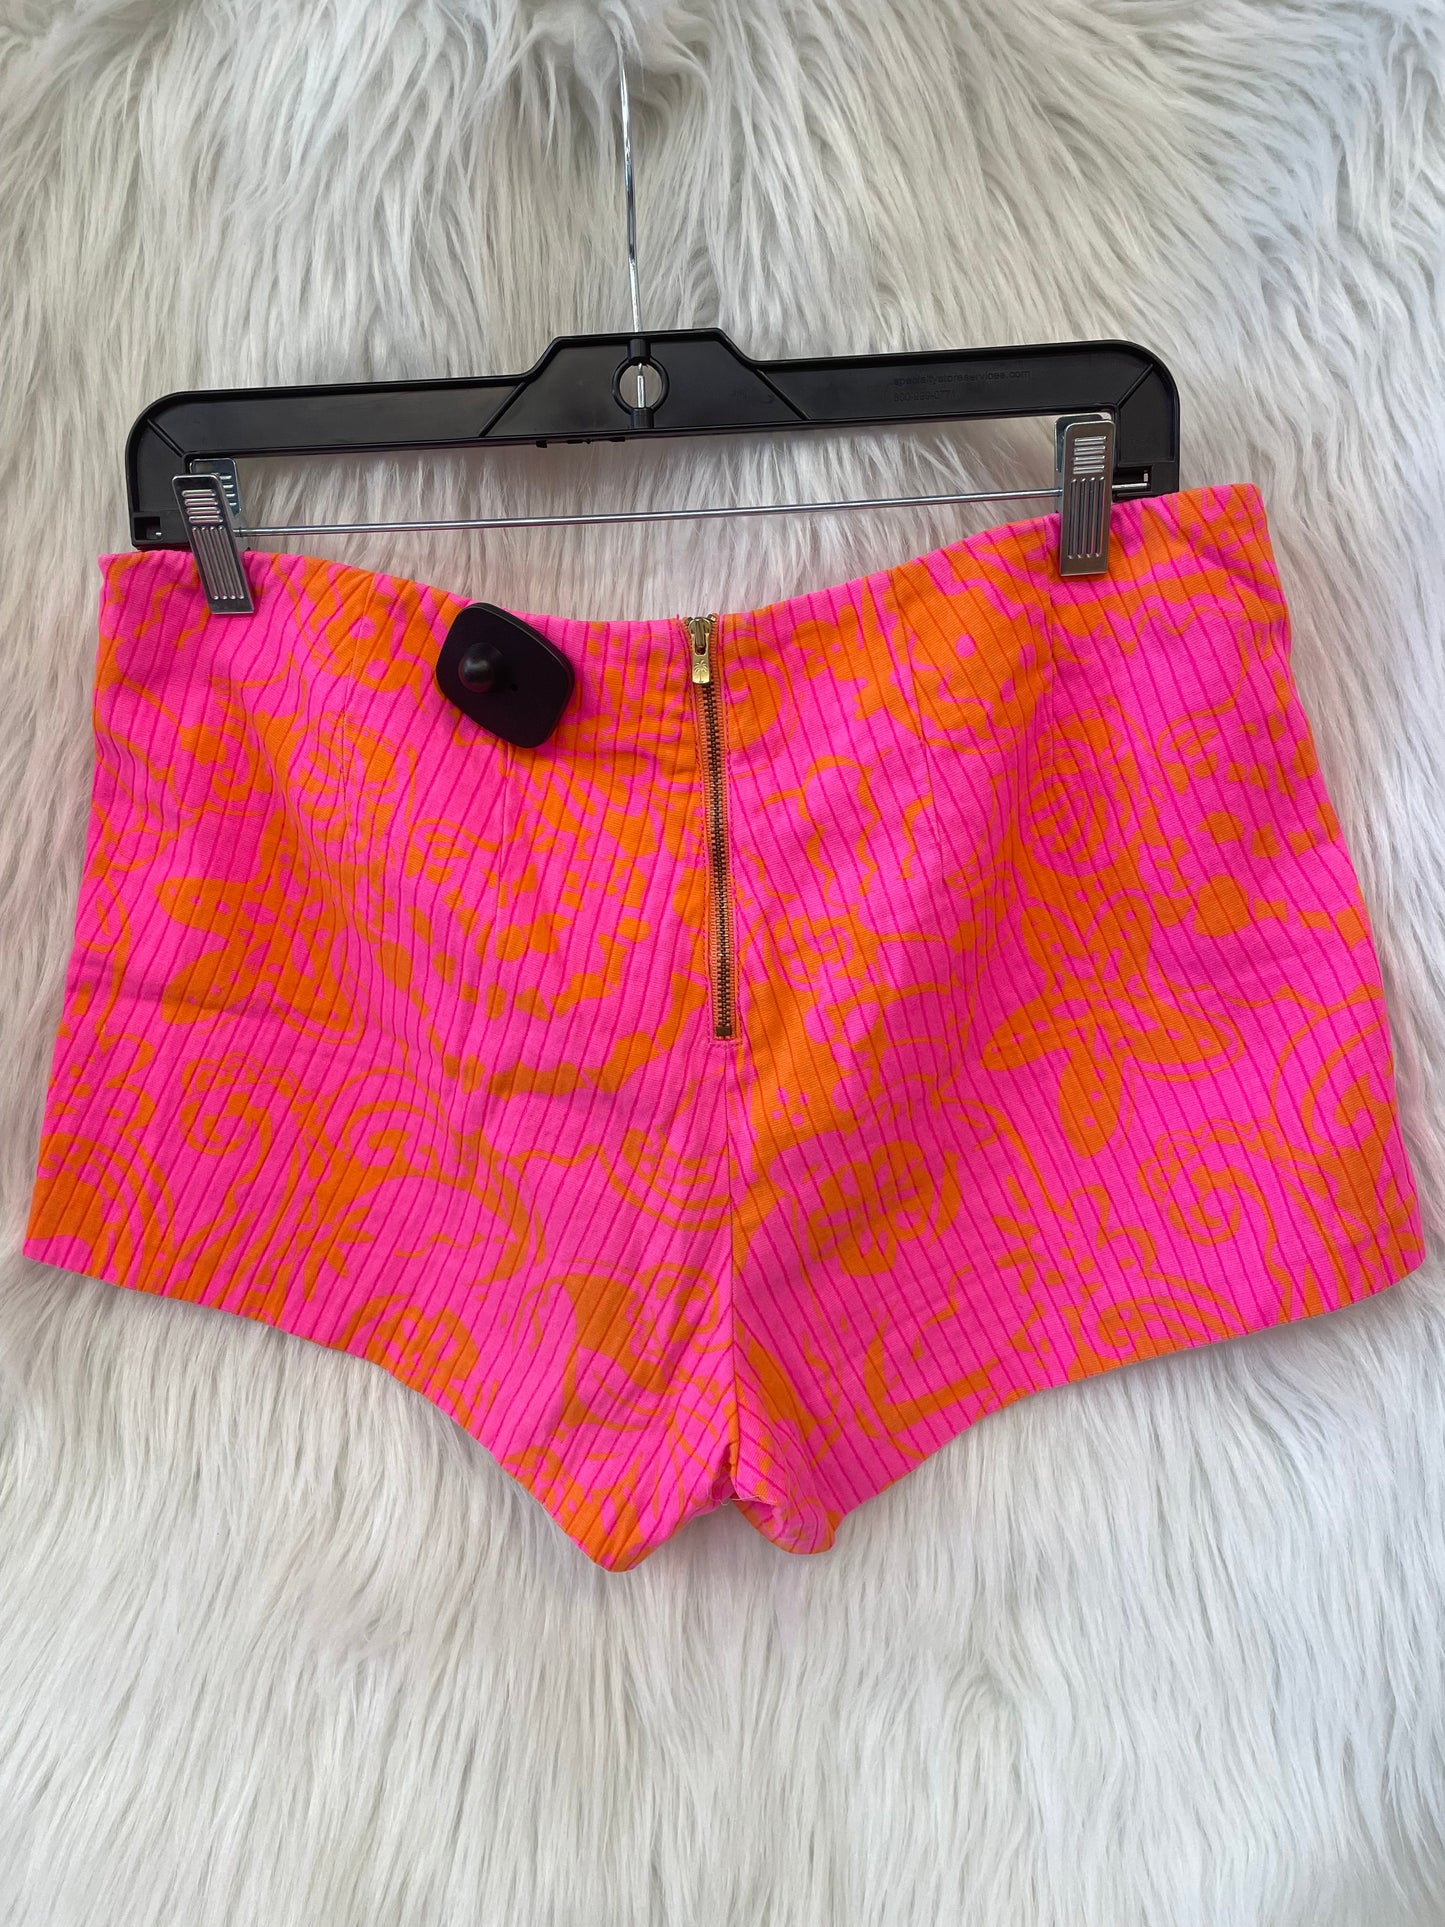 Orange & Pink Shorts Lilly Pulitzer, Size 8